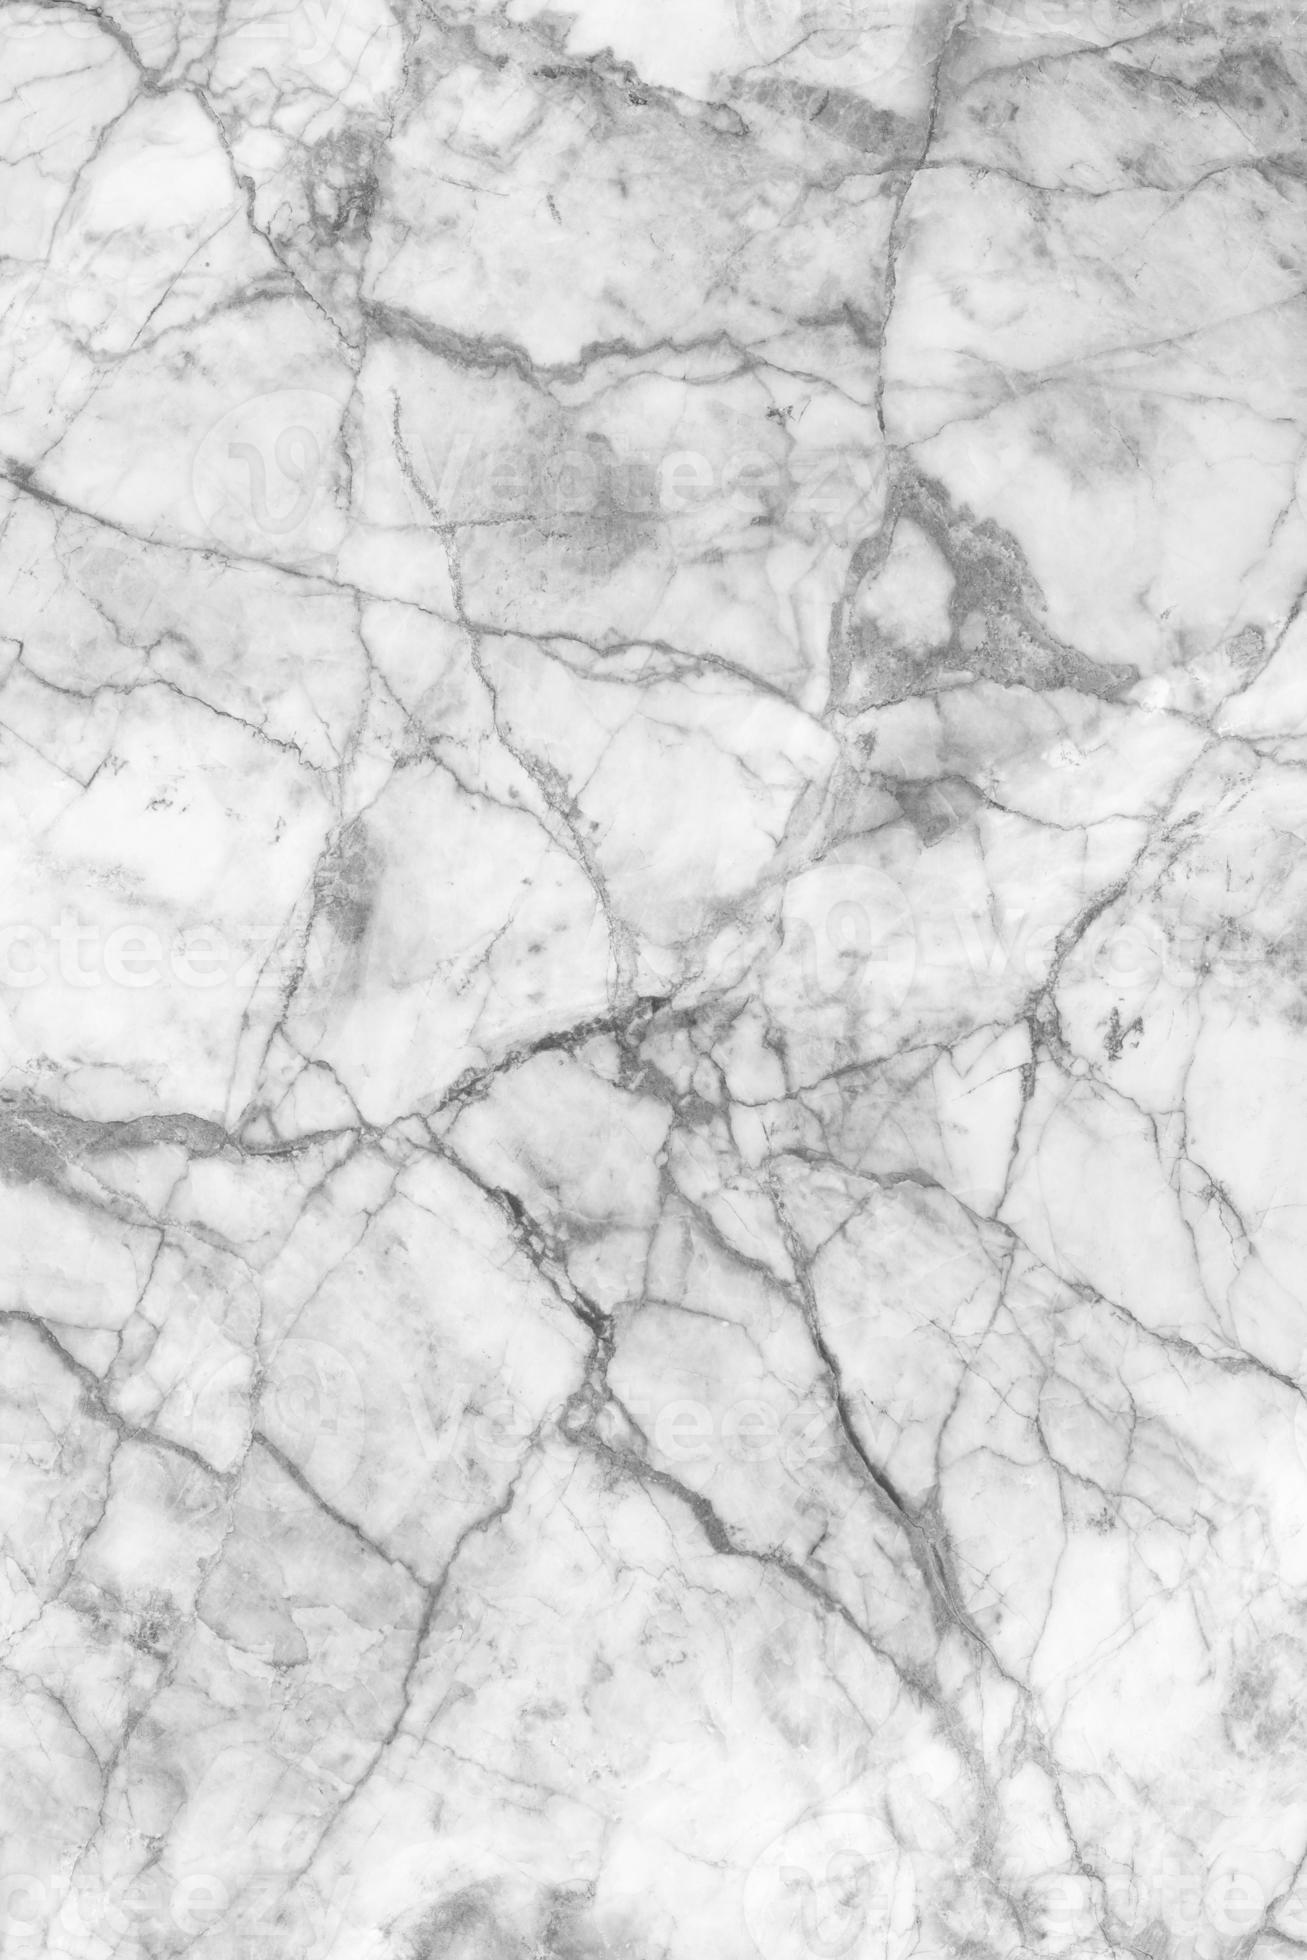 Oraal Afdaling Melodieus grijs marmer patroon textuur in zwart-witte achtergrond. 987073 Stockfoto